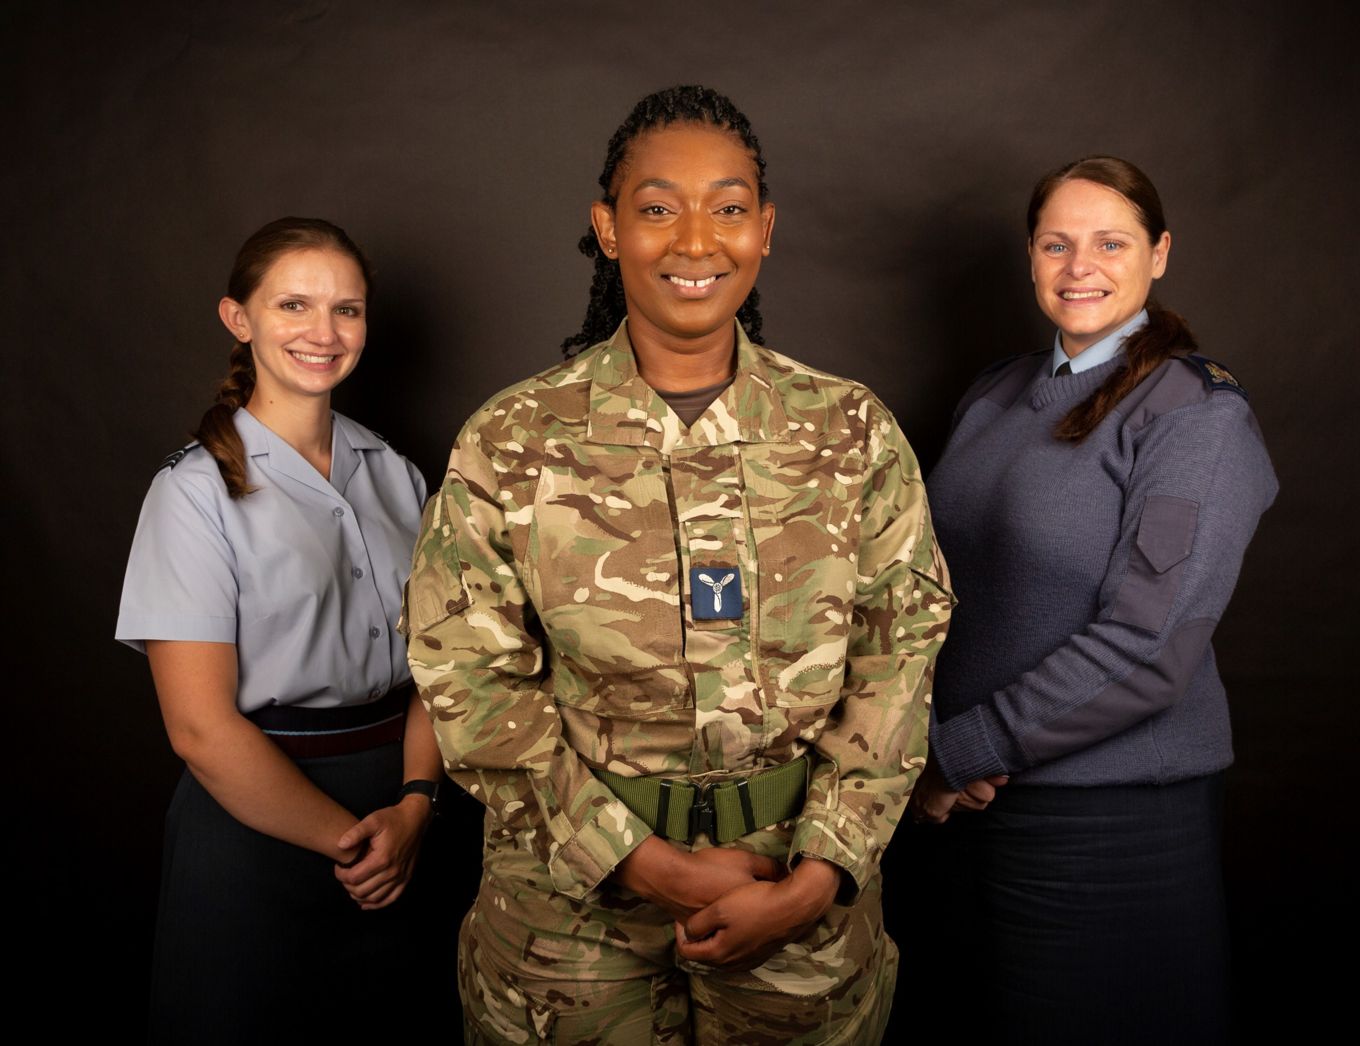 Images shows female aviators smiling for official portrait.